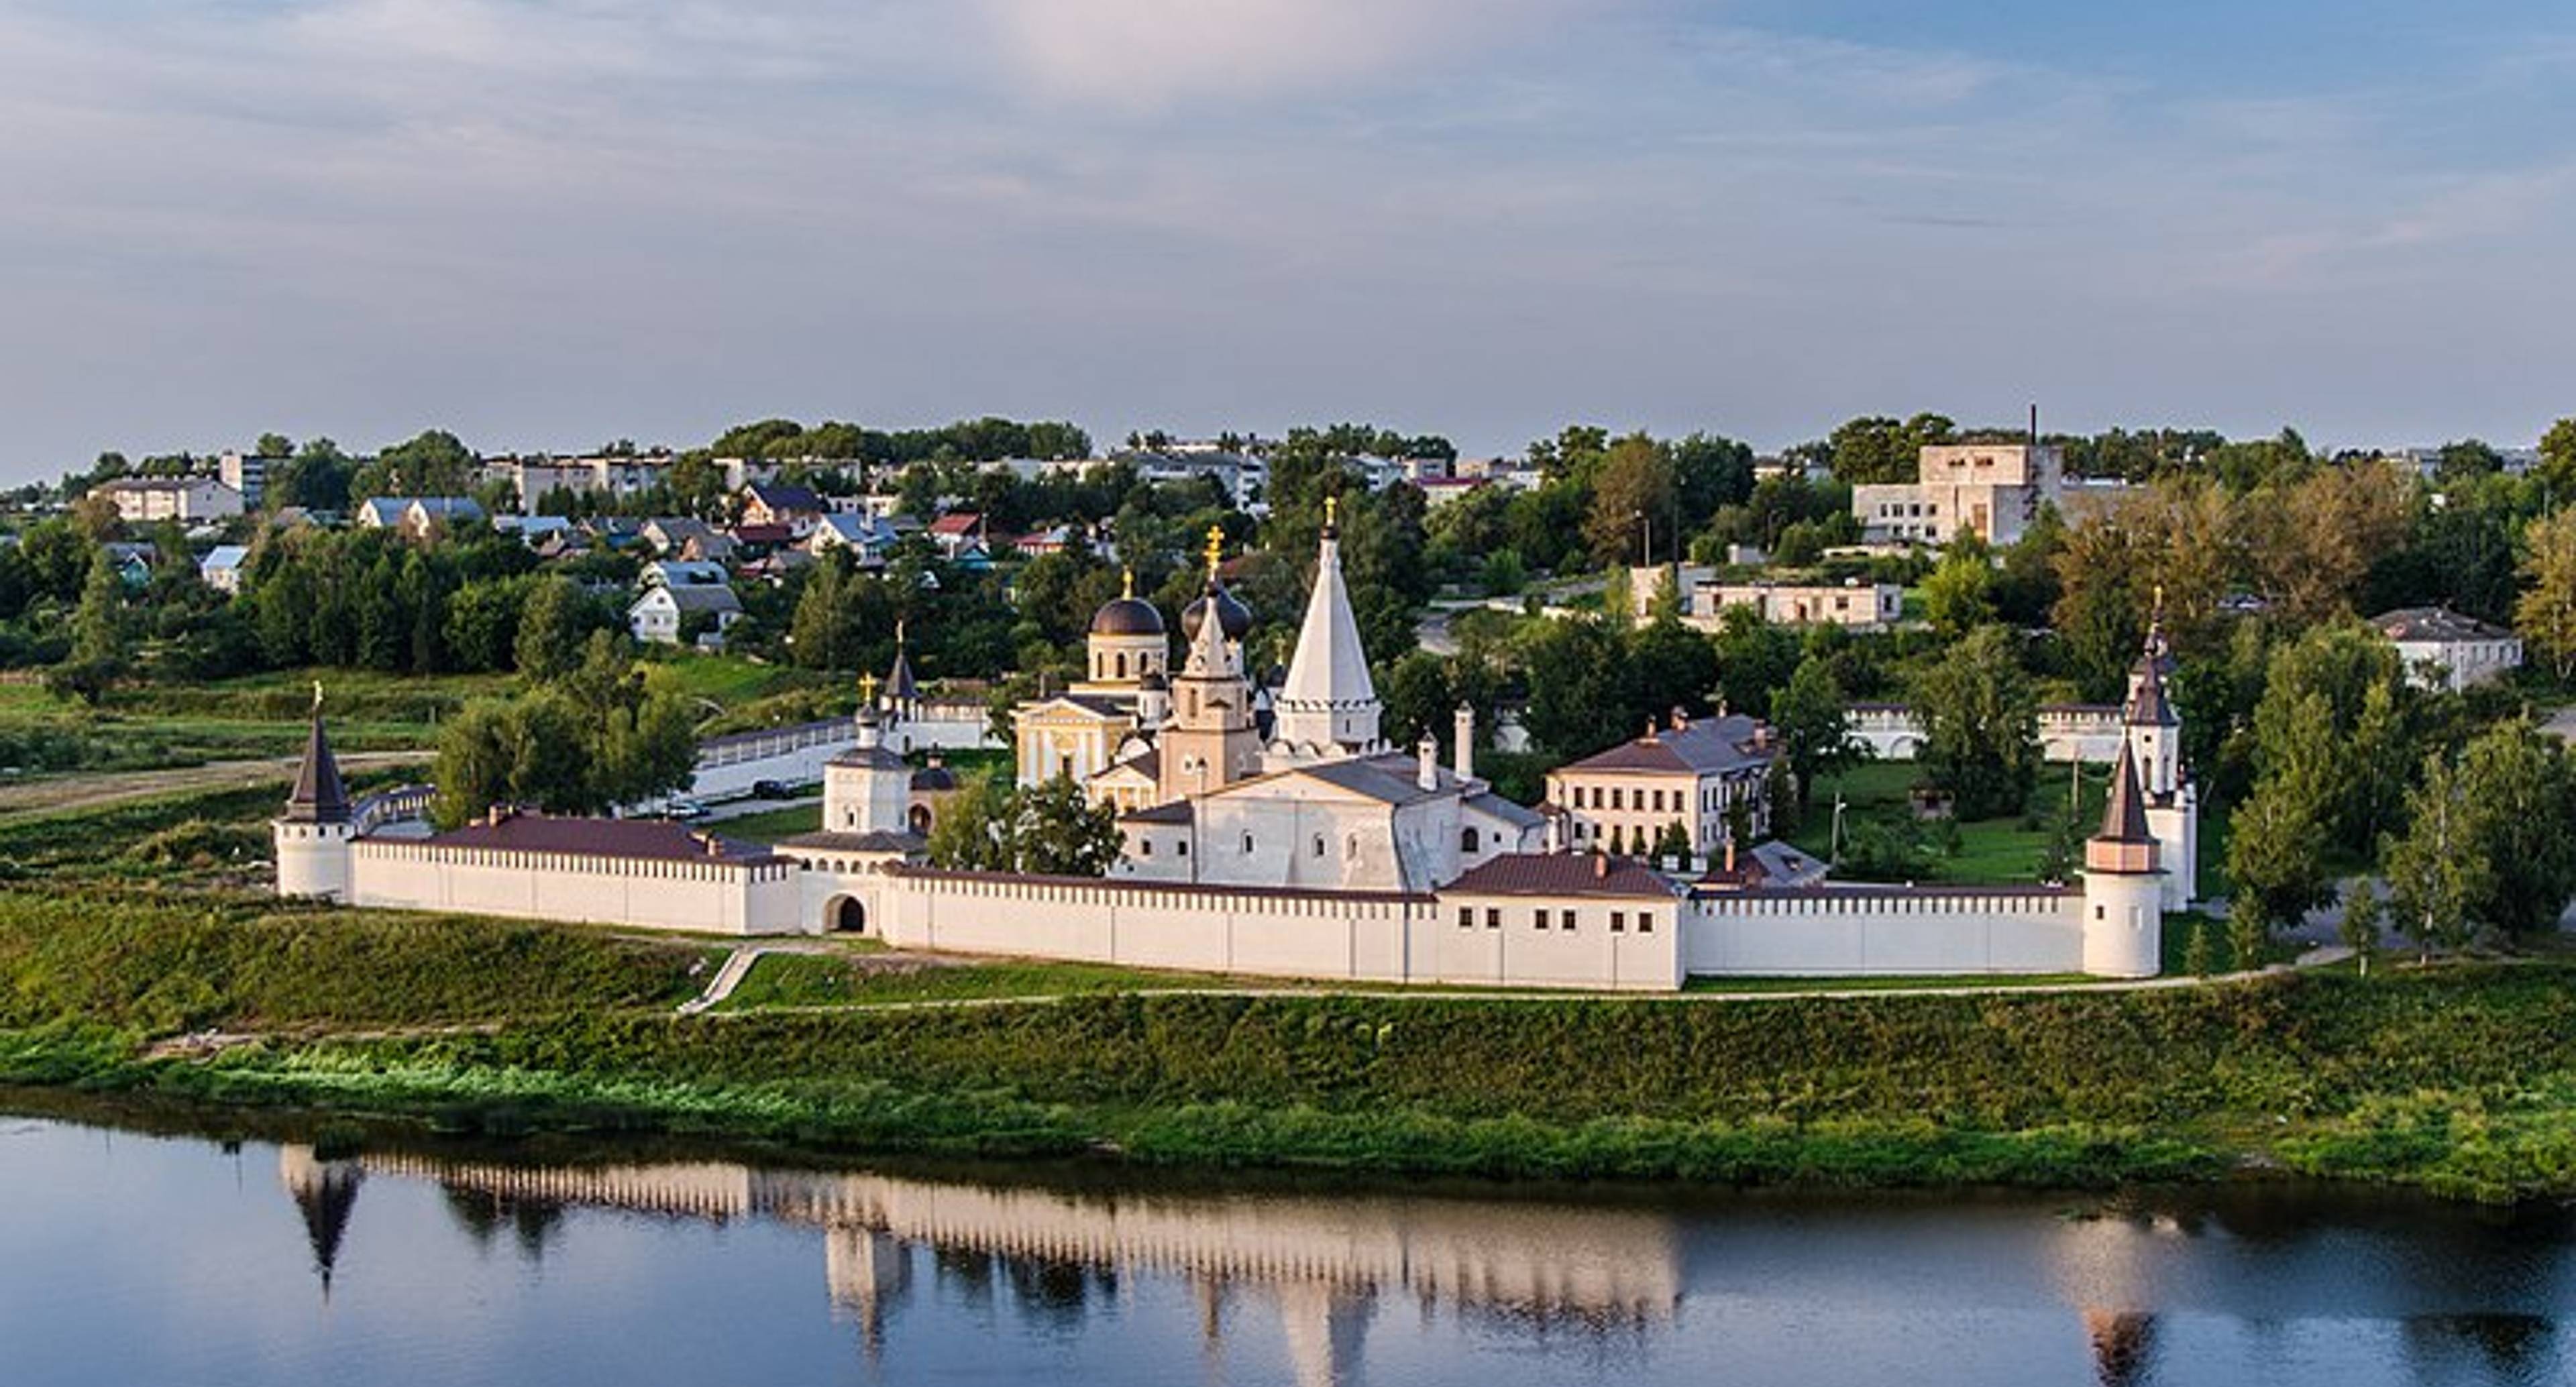 Staritsky Assumption Monastery, "Dvor Proletarka" and the lighthouse on Lake Senezh